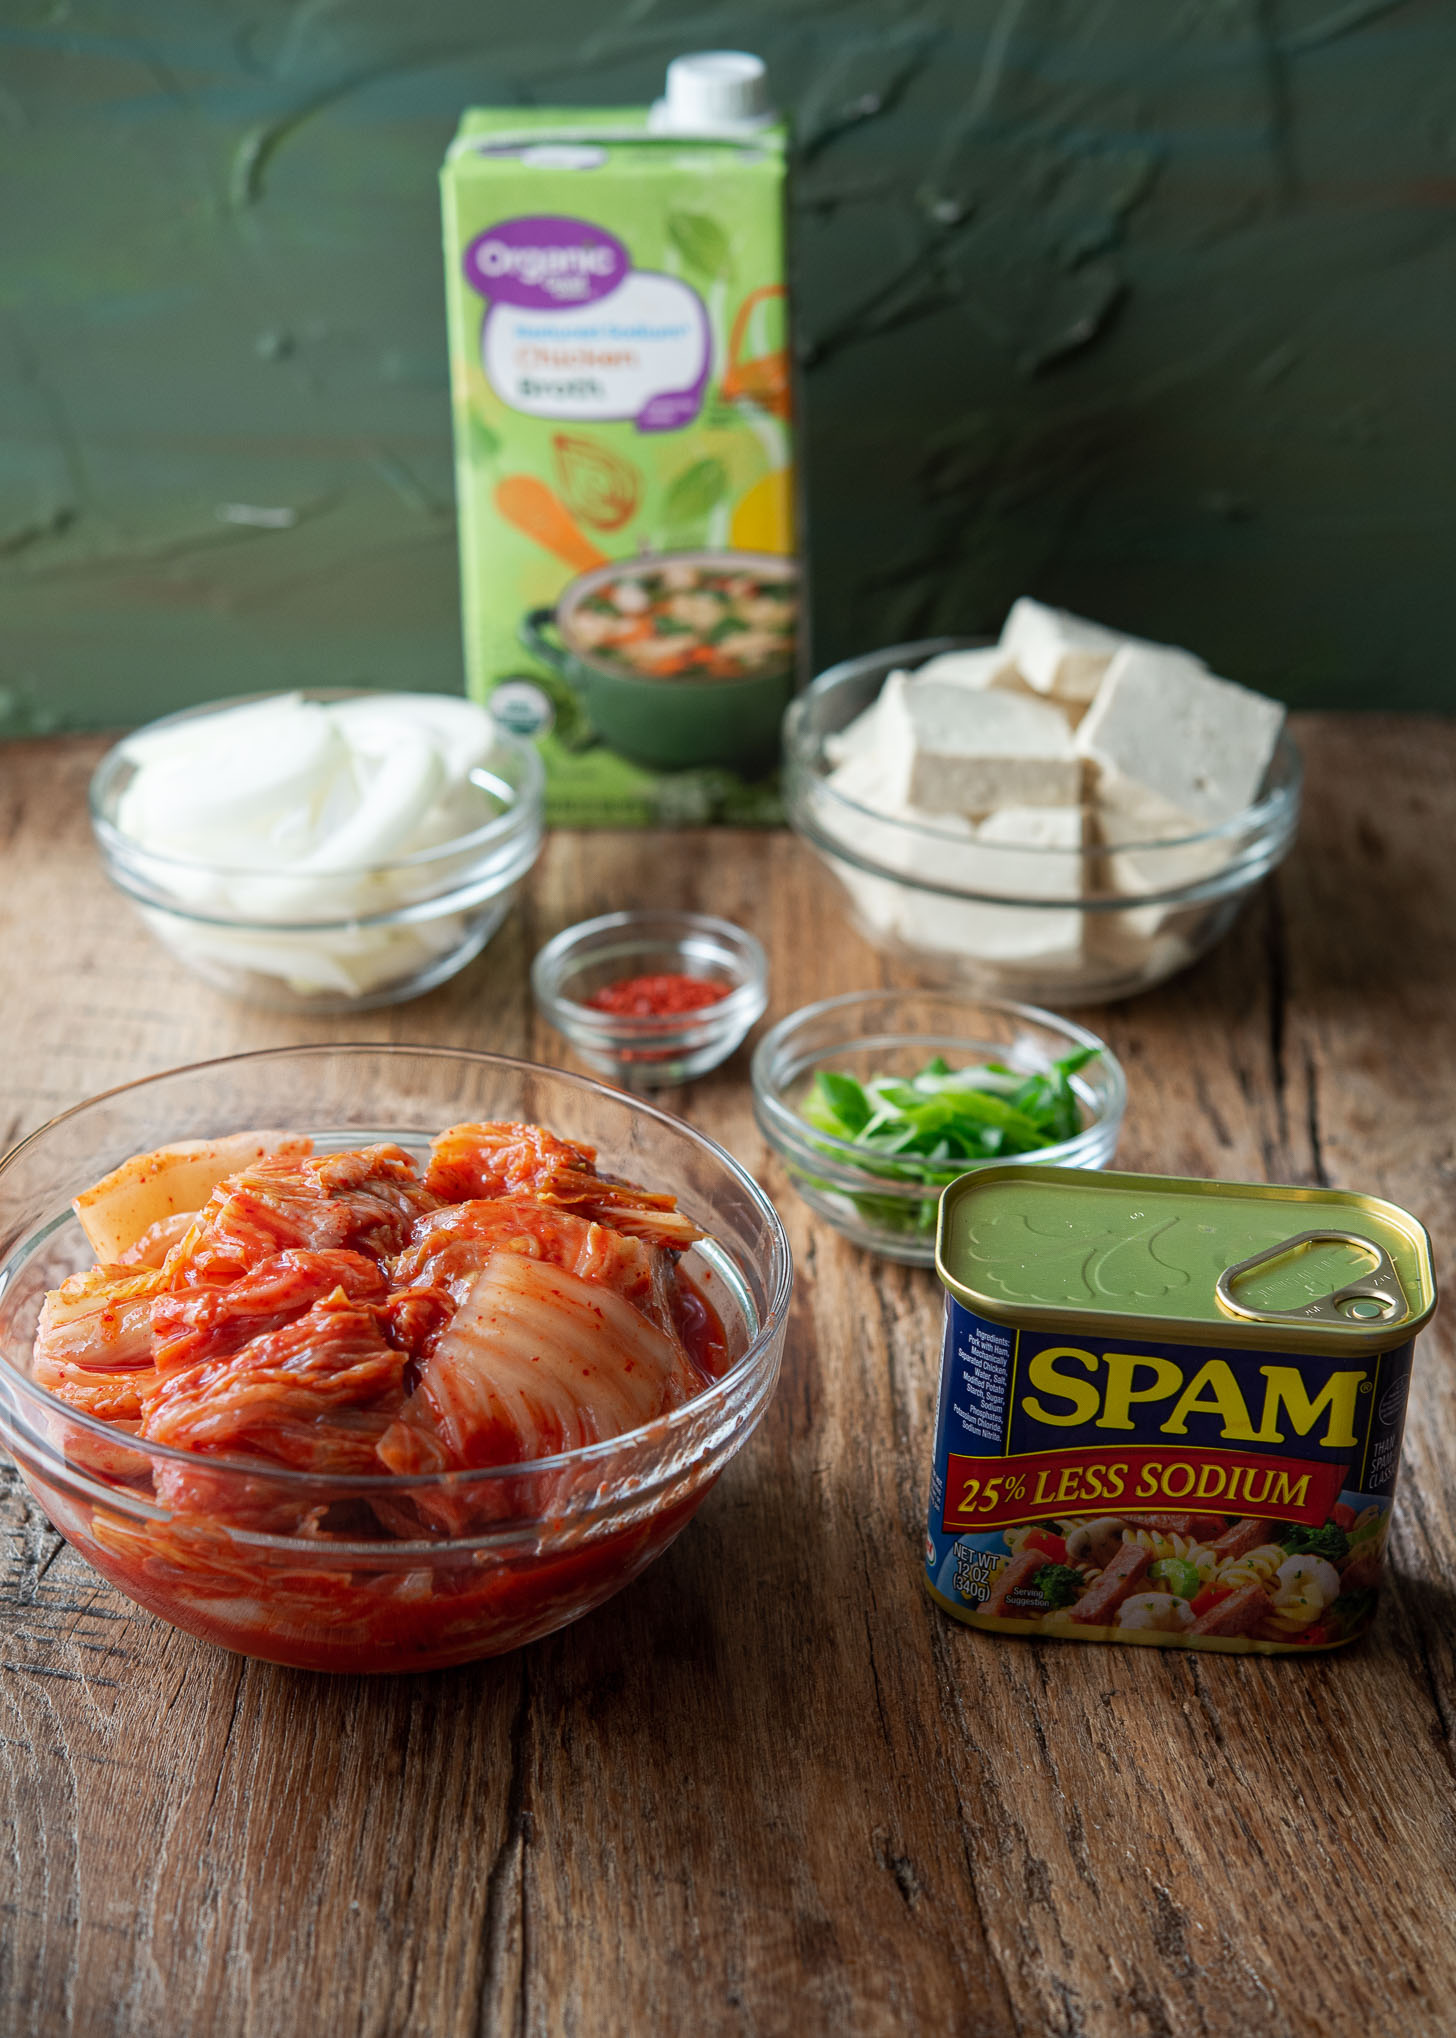 Ingredients to make Spam kimchi jjigae are presented.